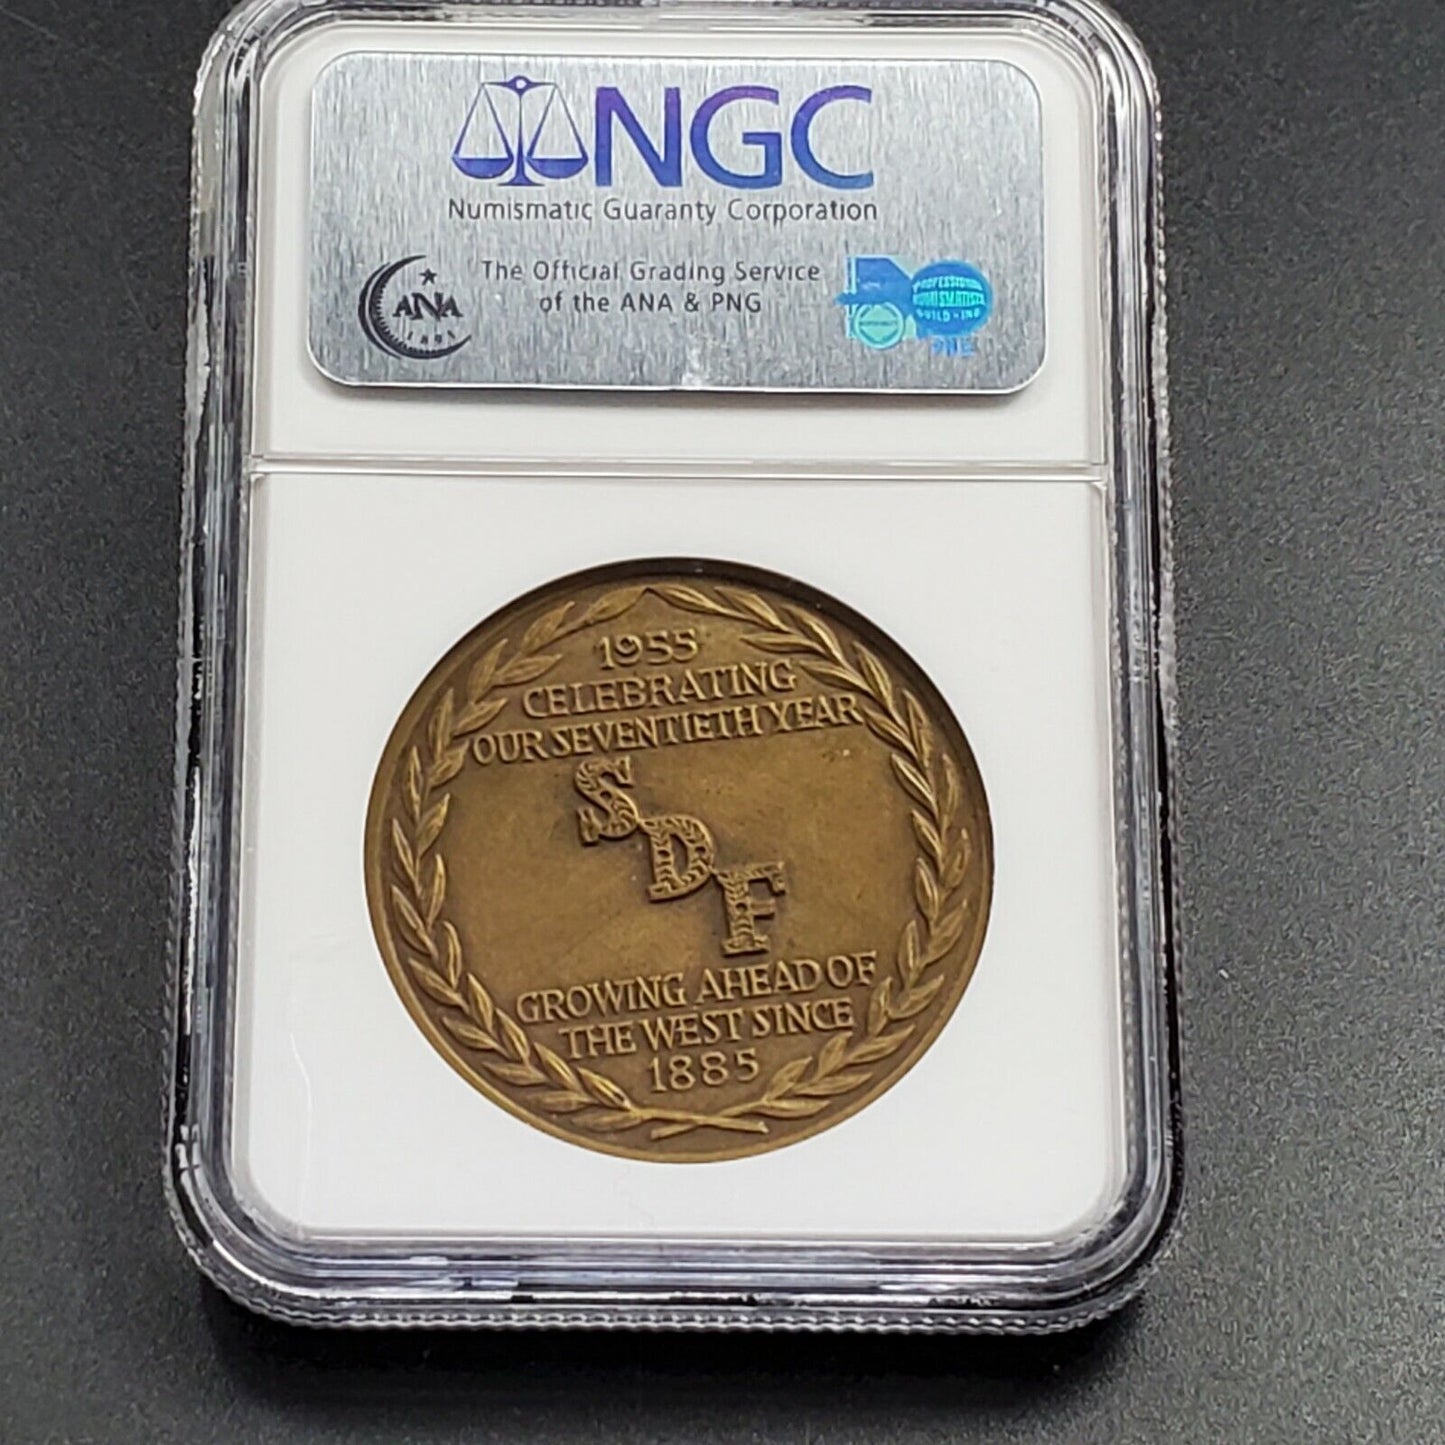 1955 San Diego Federal Savings & Loan Association Medal Gold Miner NGC MS65 Gem